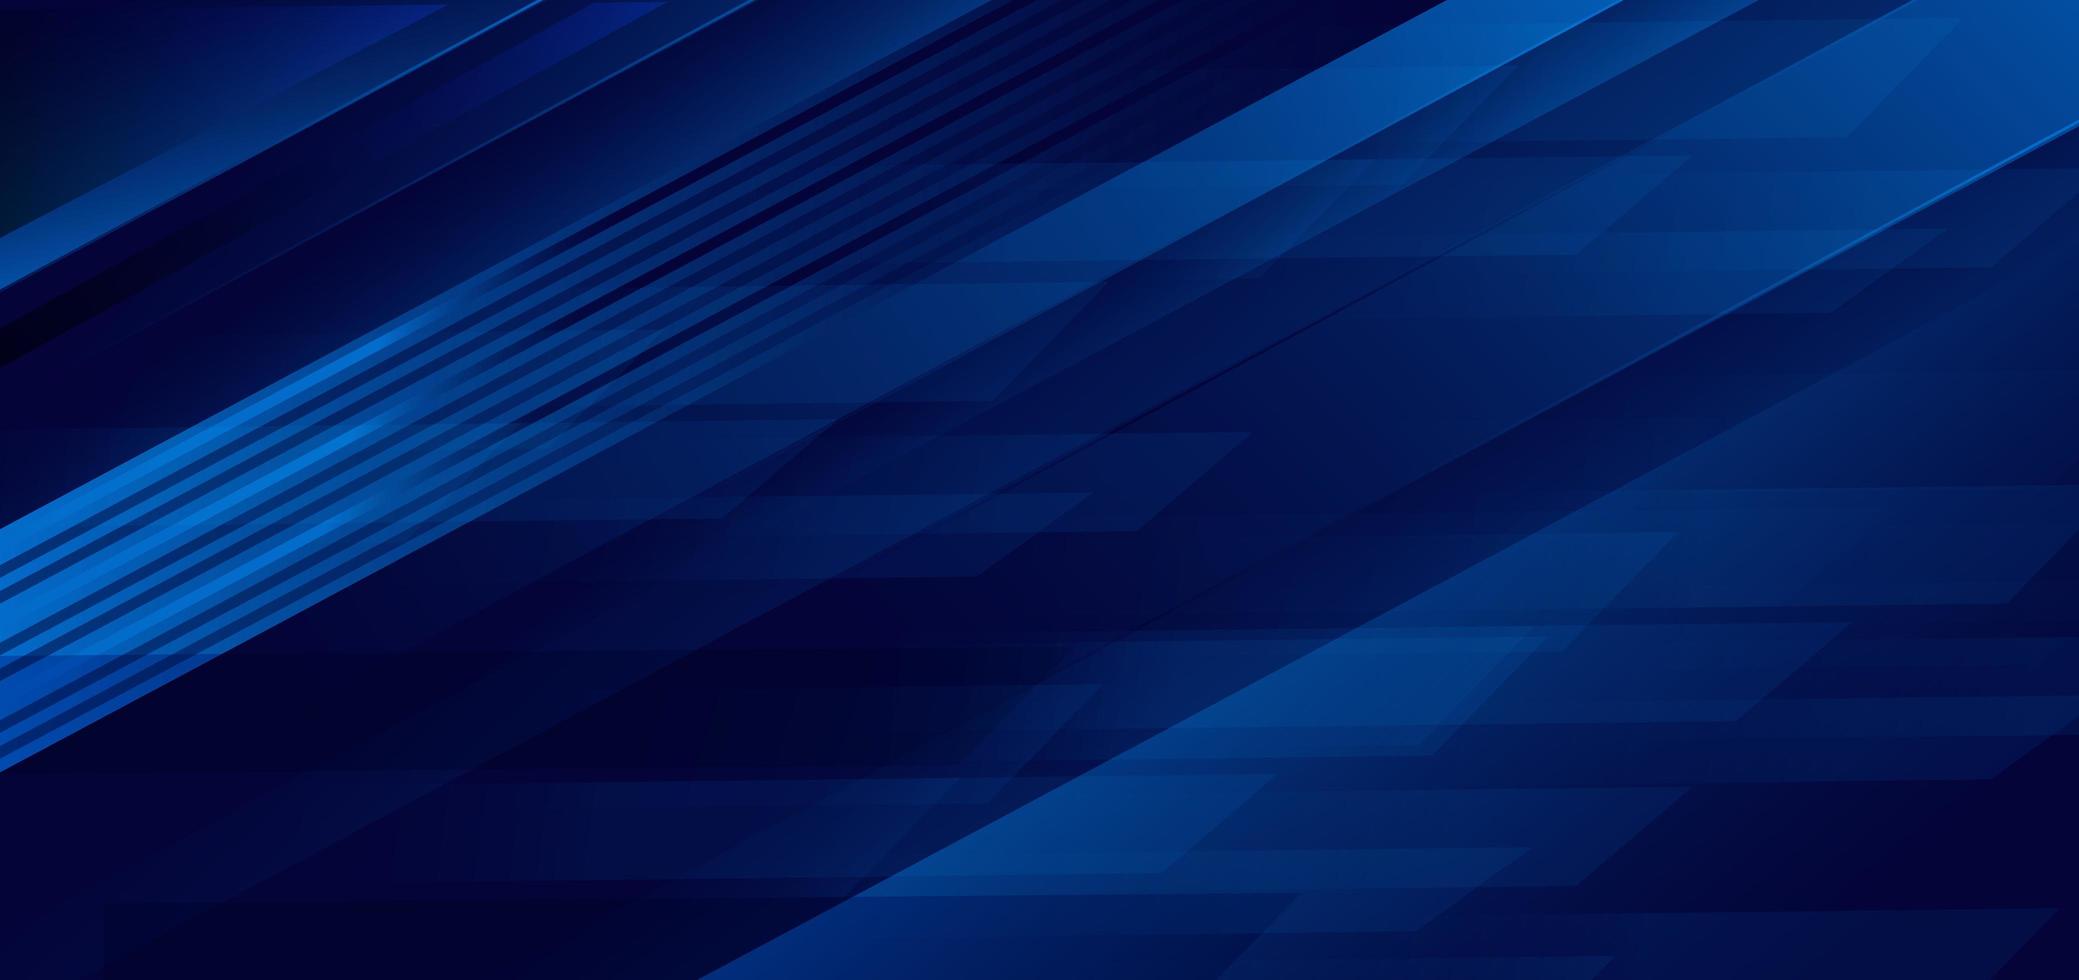 Dark blue stripes geometric overlapping background vector